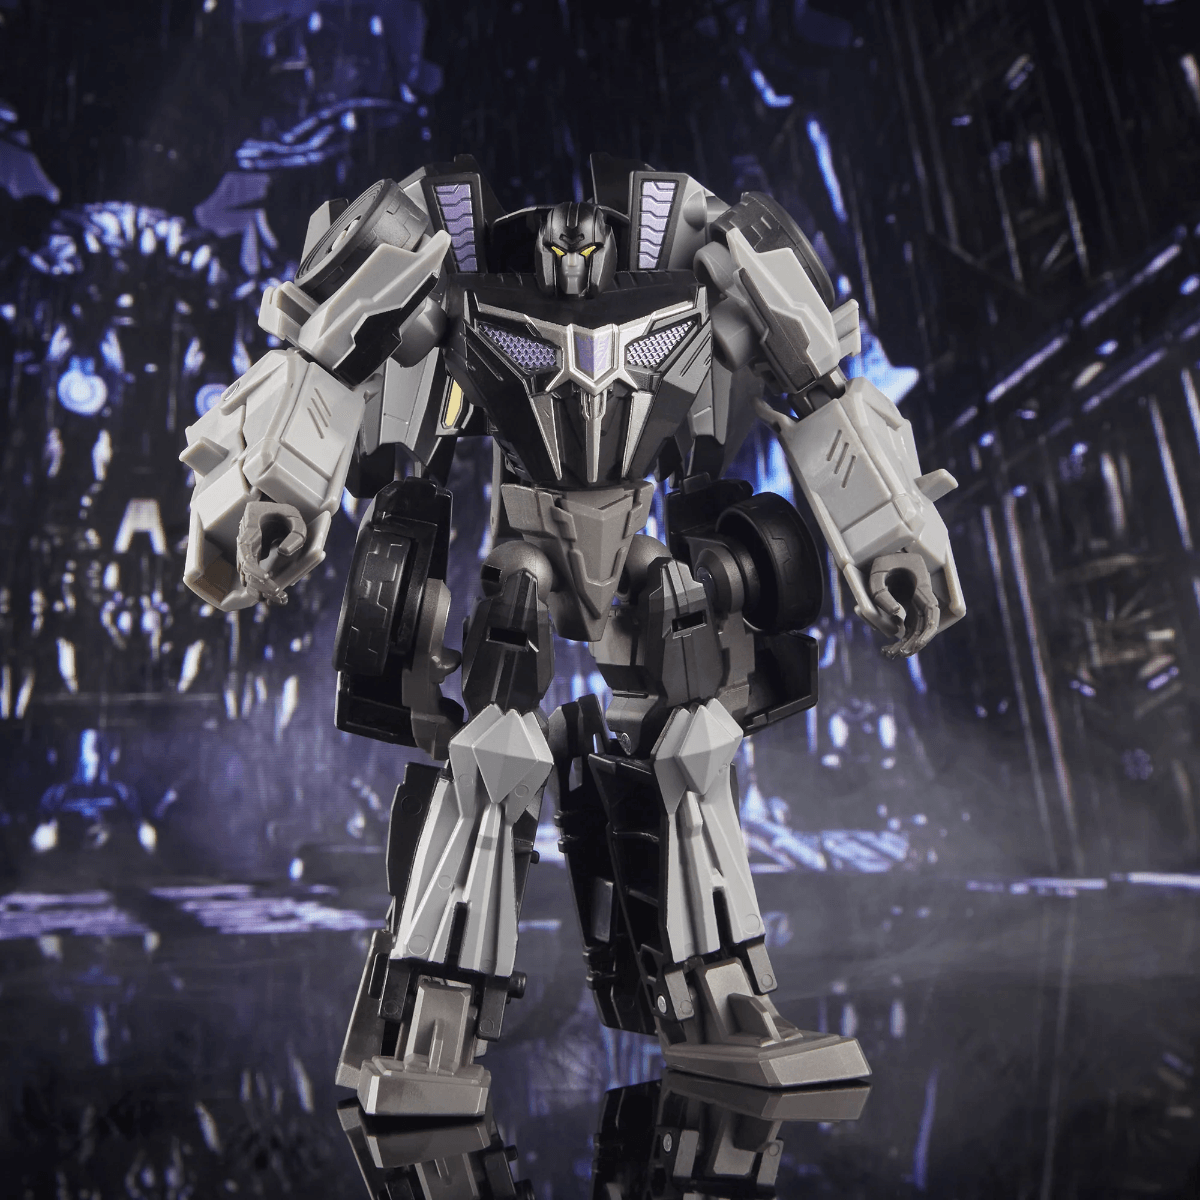 24241 Transformers Studio Series: Deluxe Class - 02 Gamer Edition Barricade - Hasbro - Titan Pop Culture